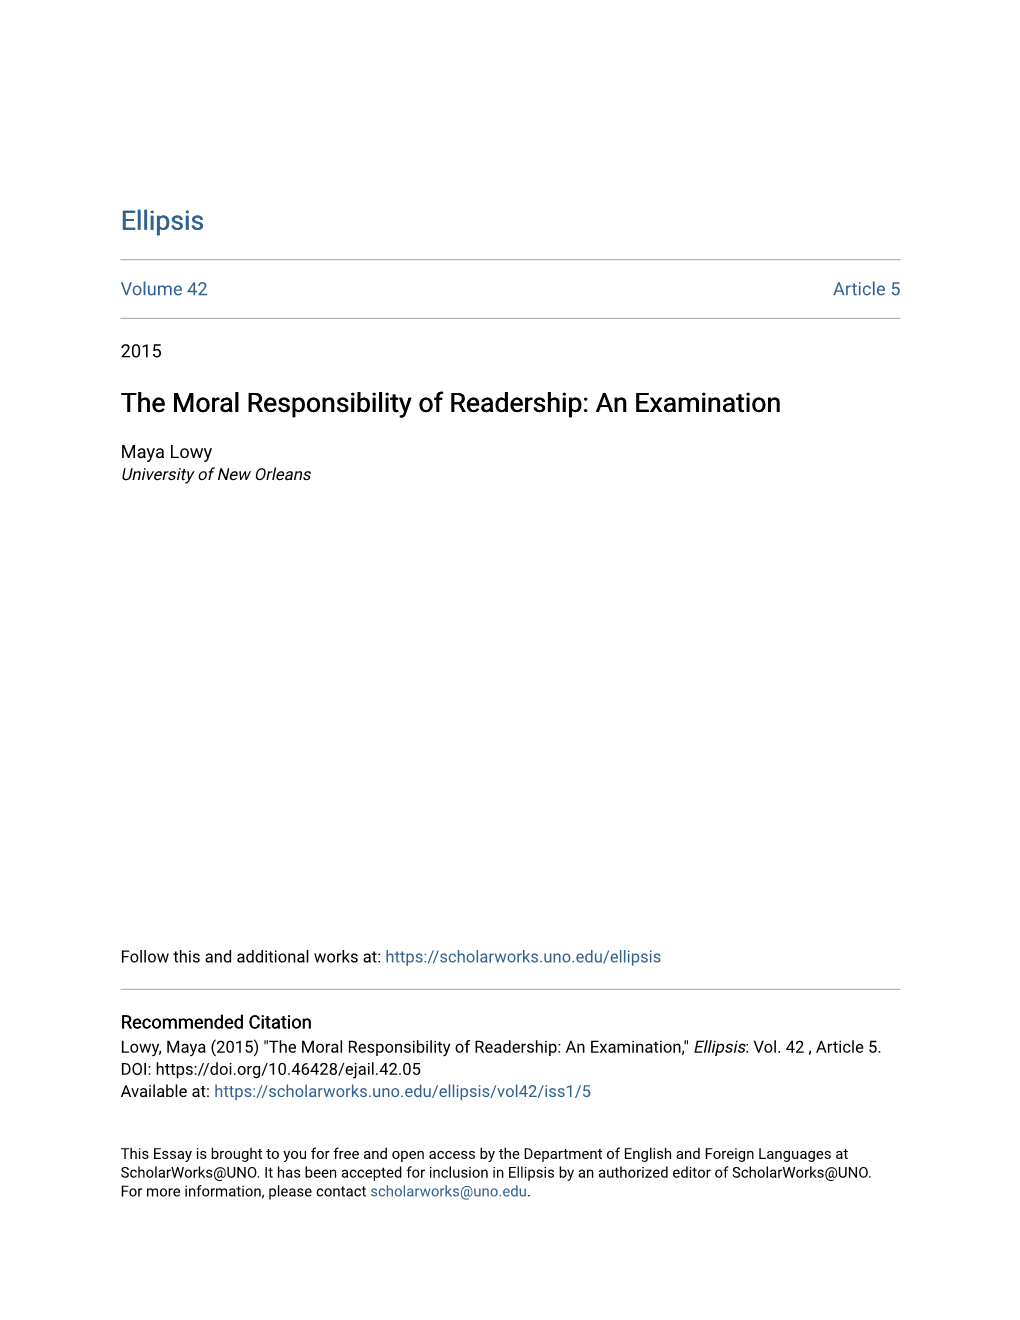 The Moral Responsibility of Readership: an Examination